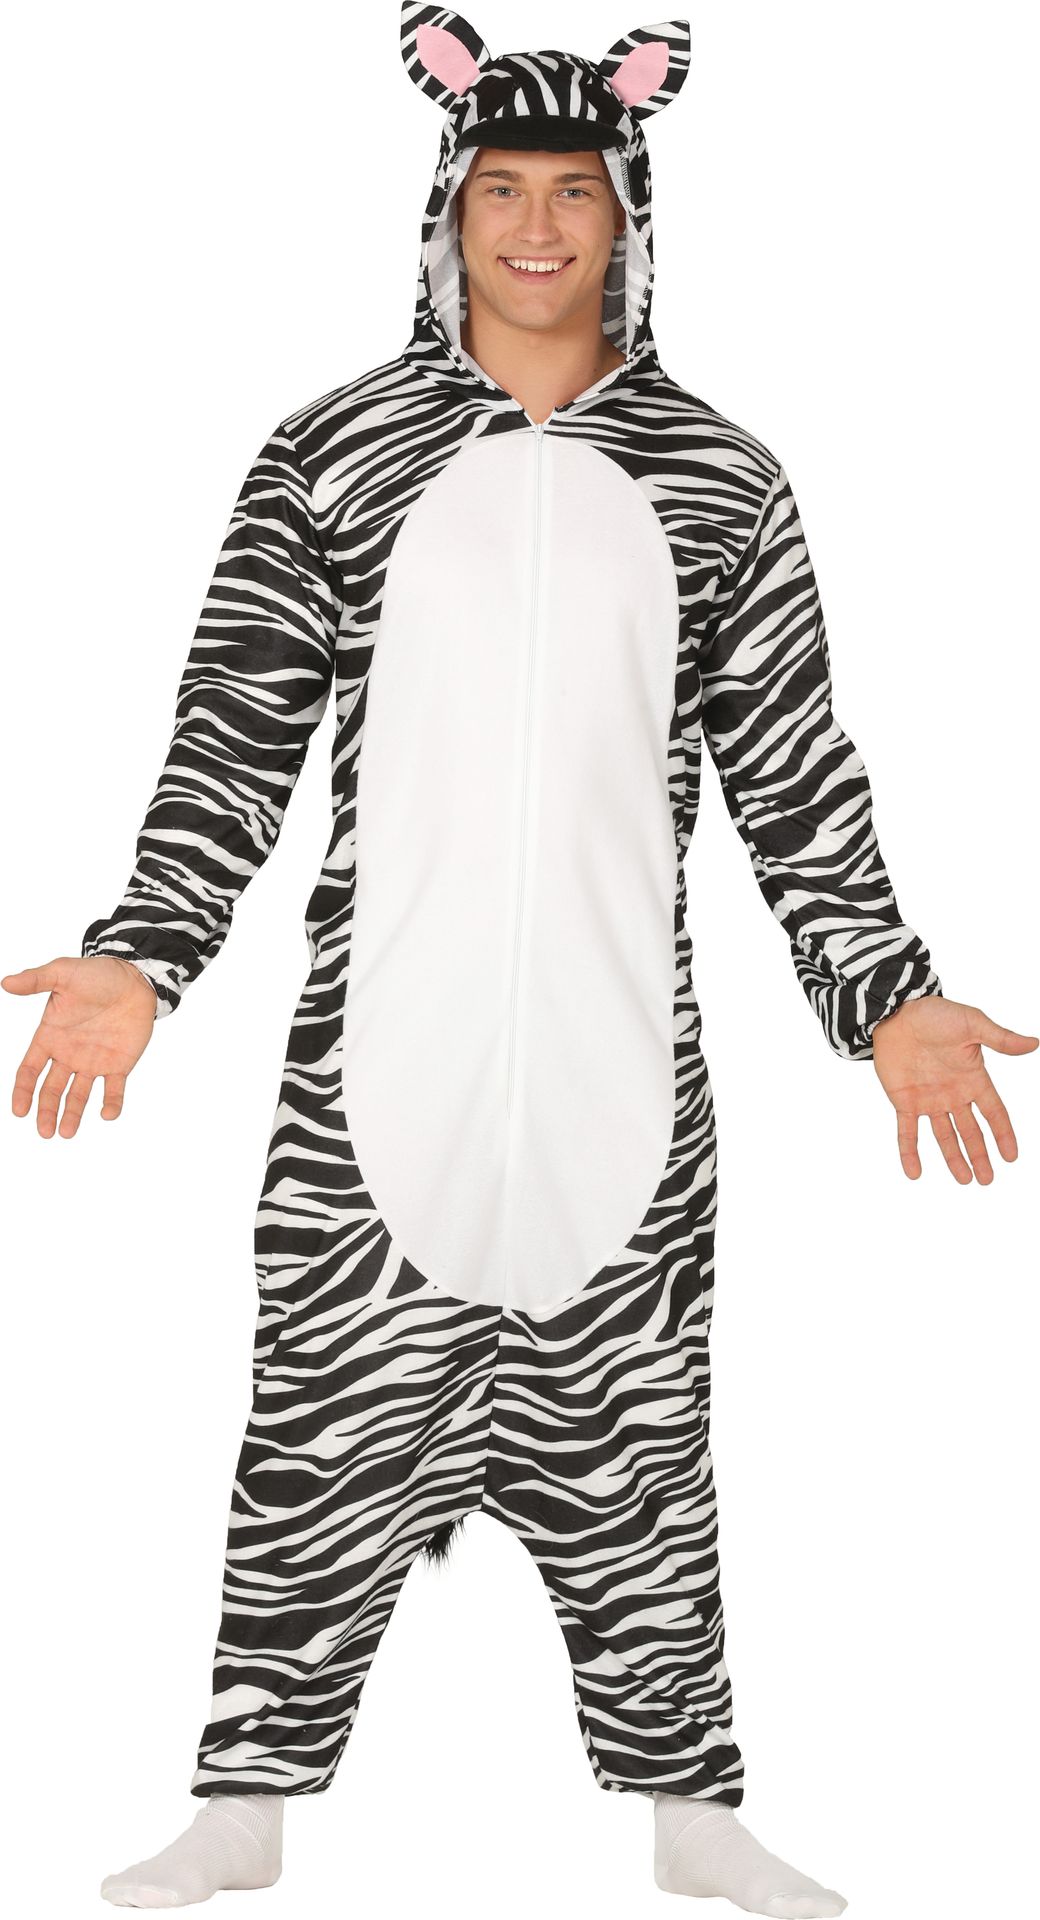 Zebra onesie volwassenen